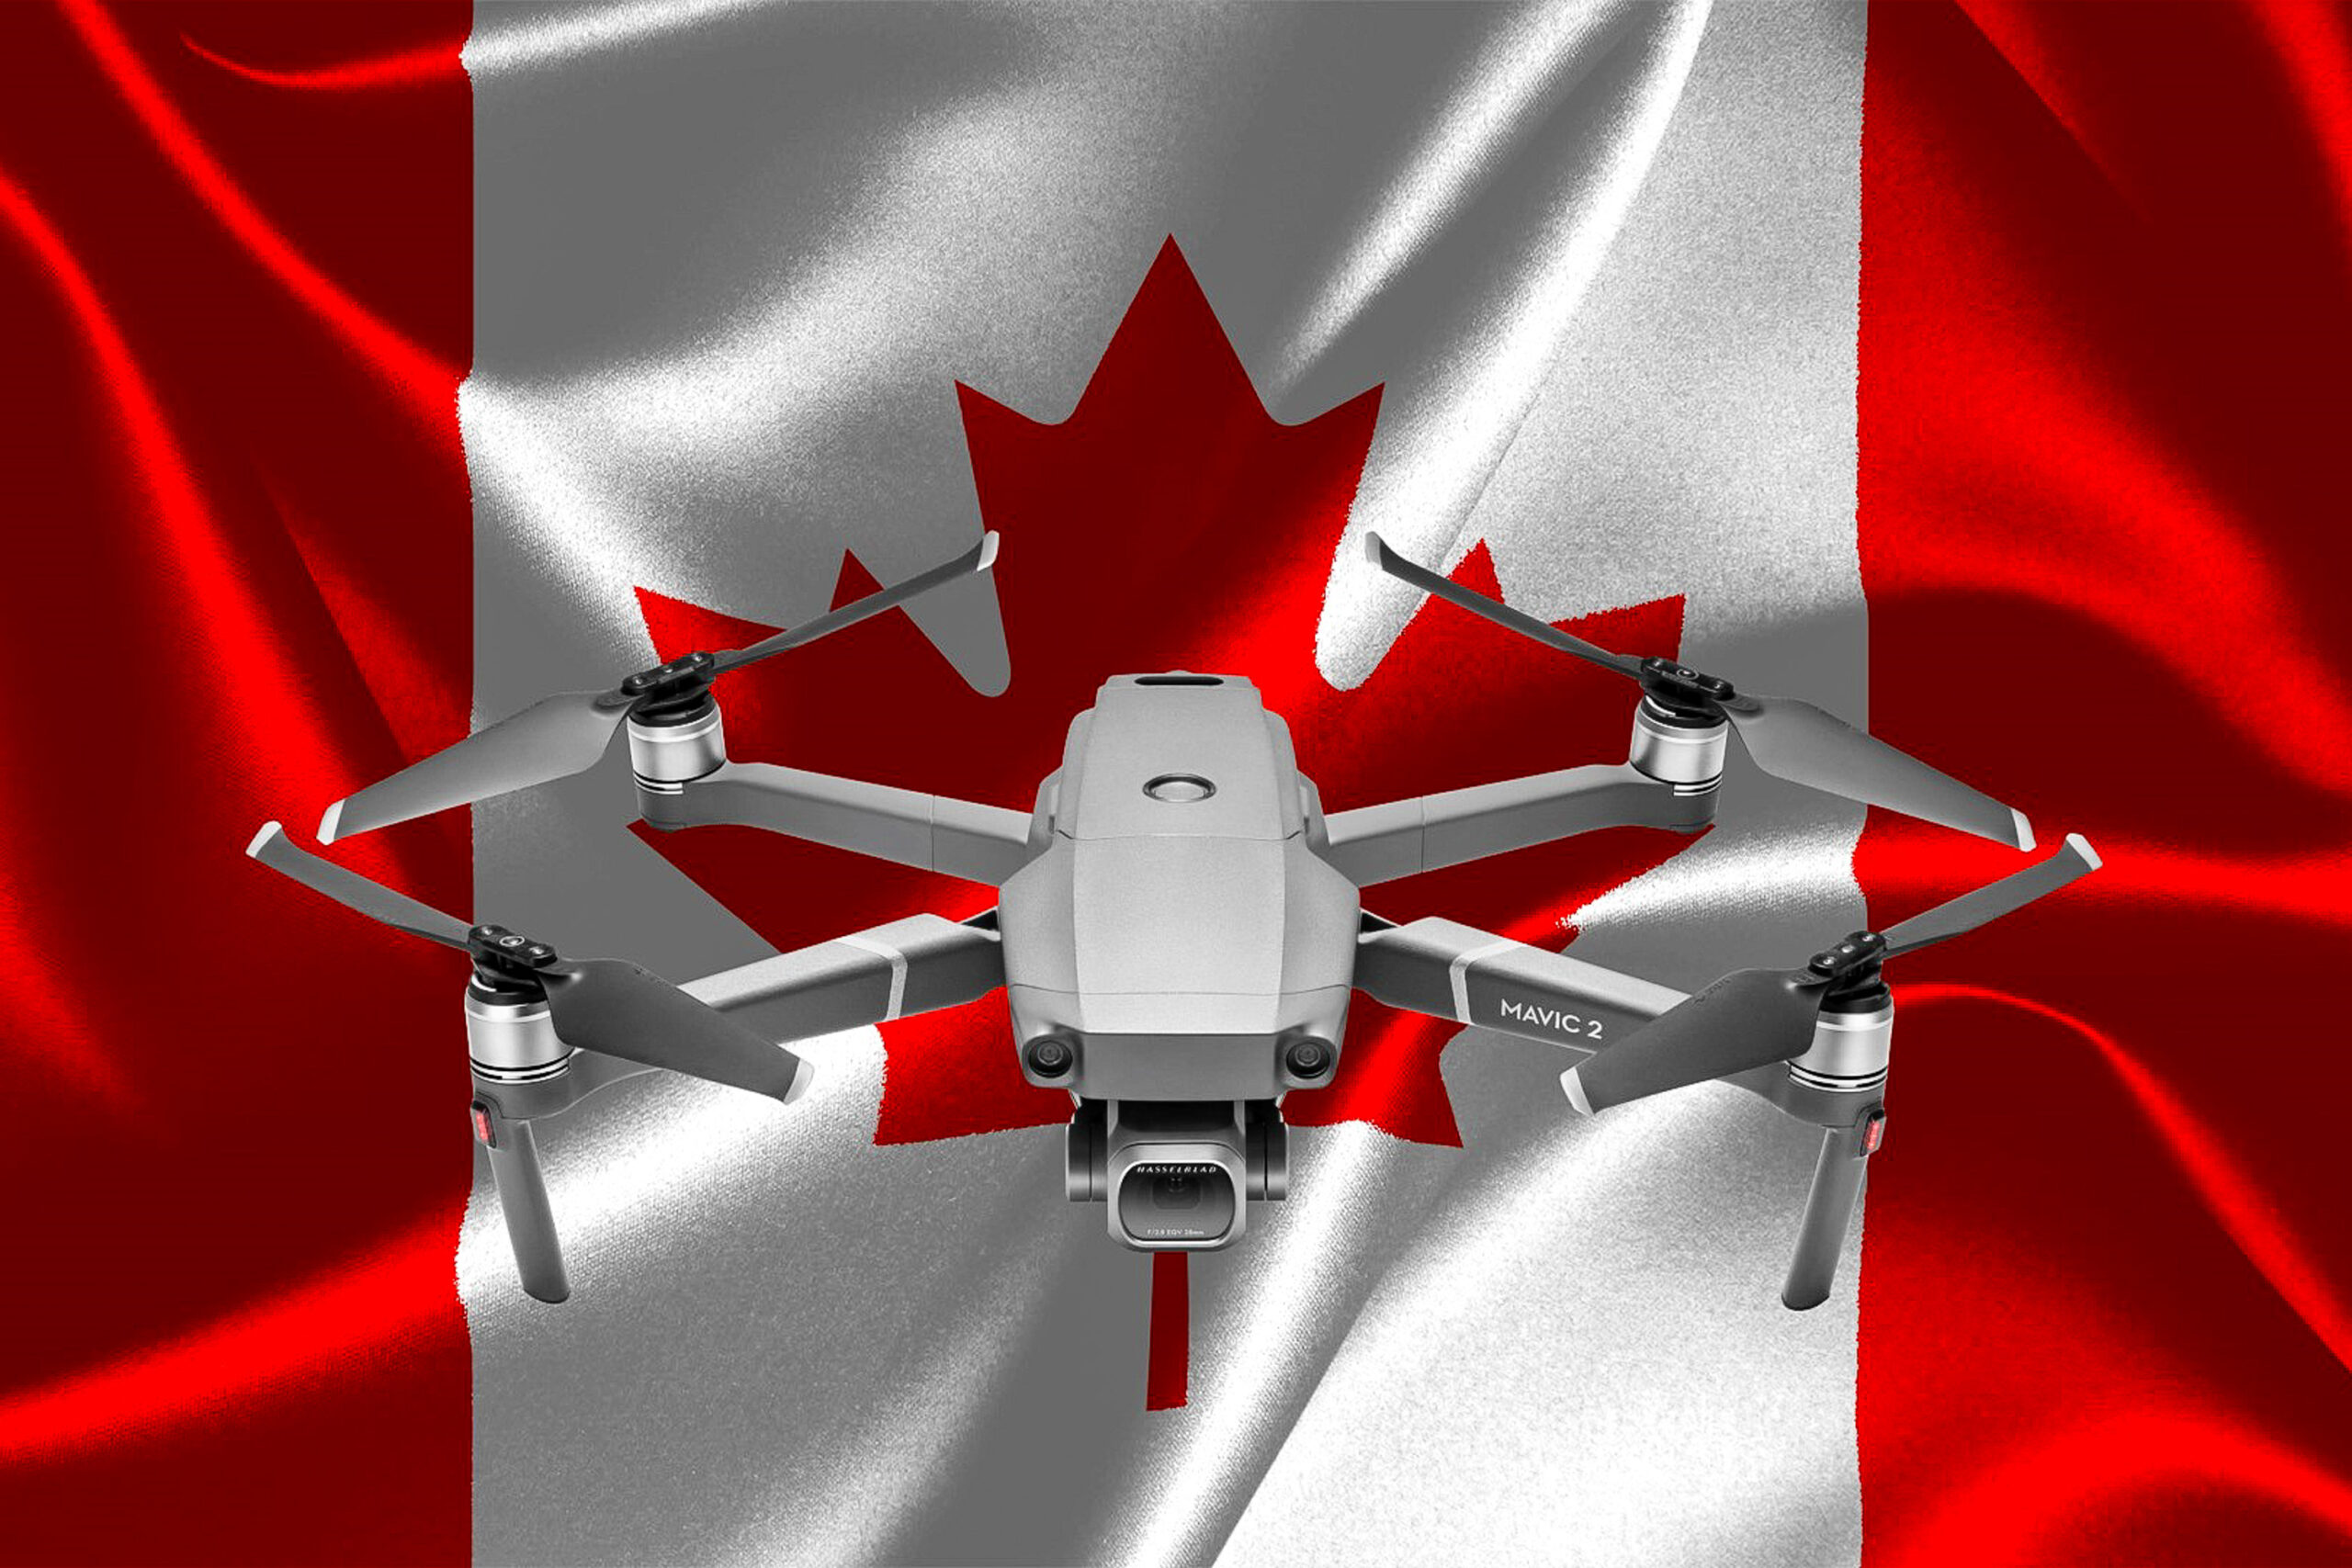 Mavic 2 Pro Drohne und Kanada Flagge